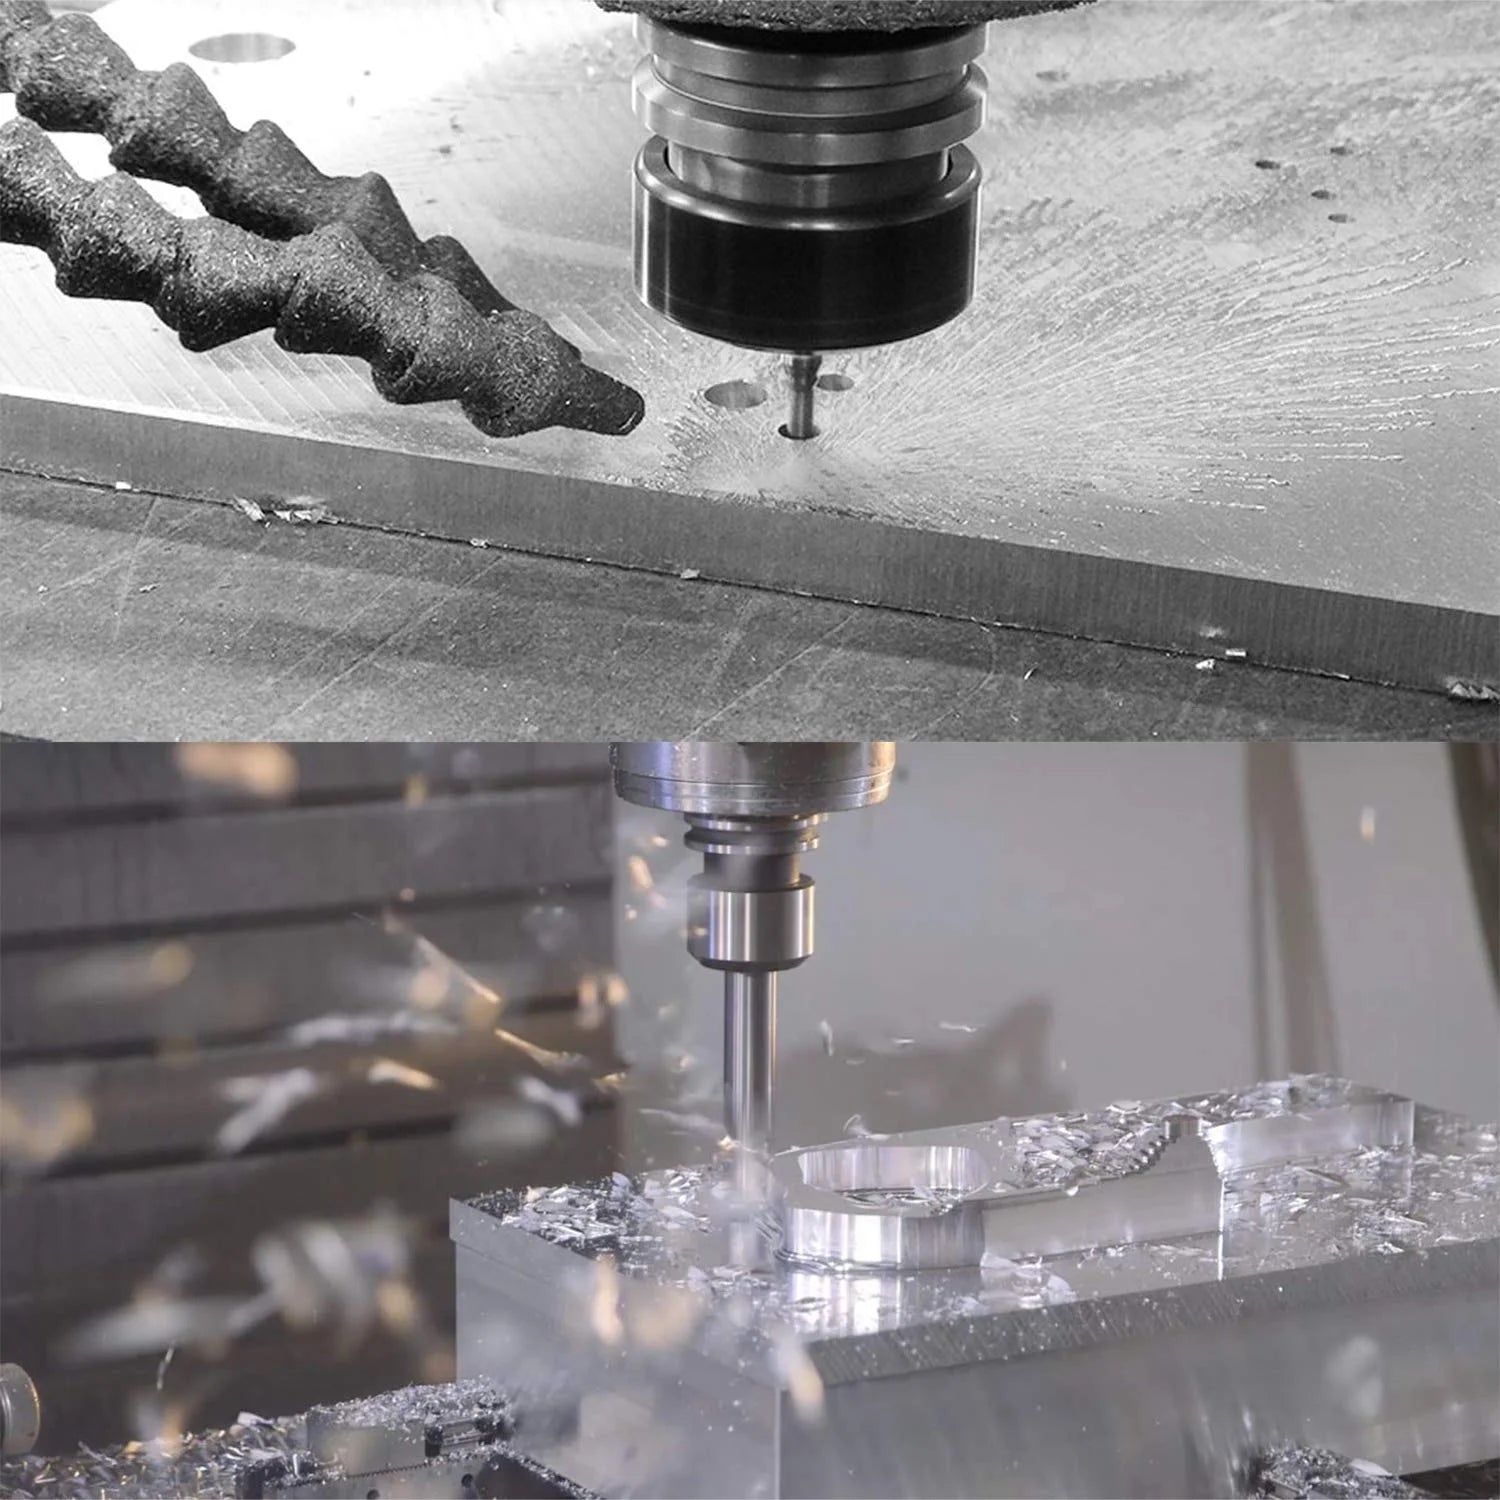 SpeTool End Mill for Aluminum CNC Spiral Router Bit for Aluminum Cut Non-Ferrous Metal Upcut  5 Pieces